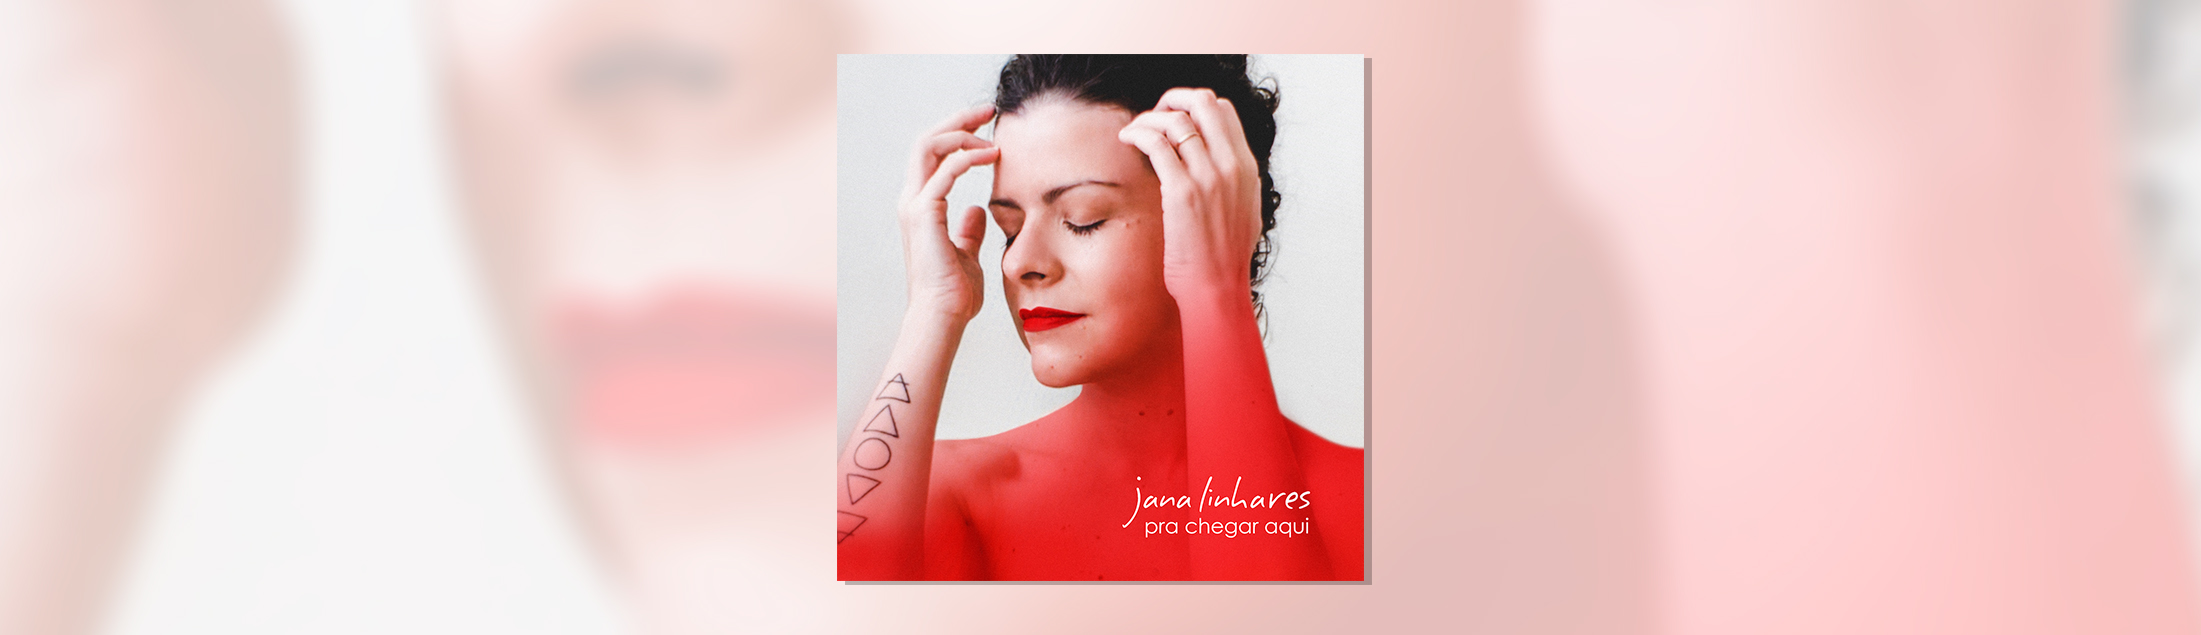 Jana Linhares libera novo single